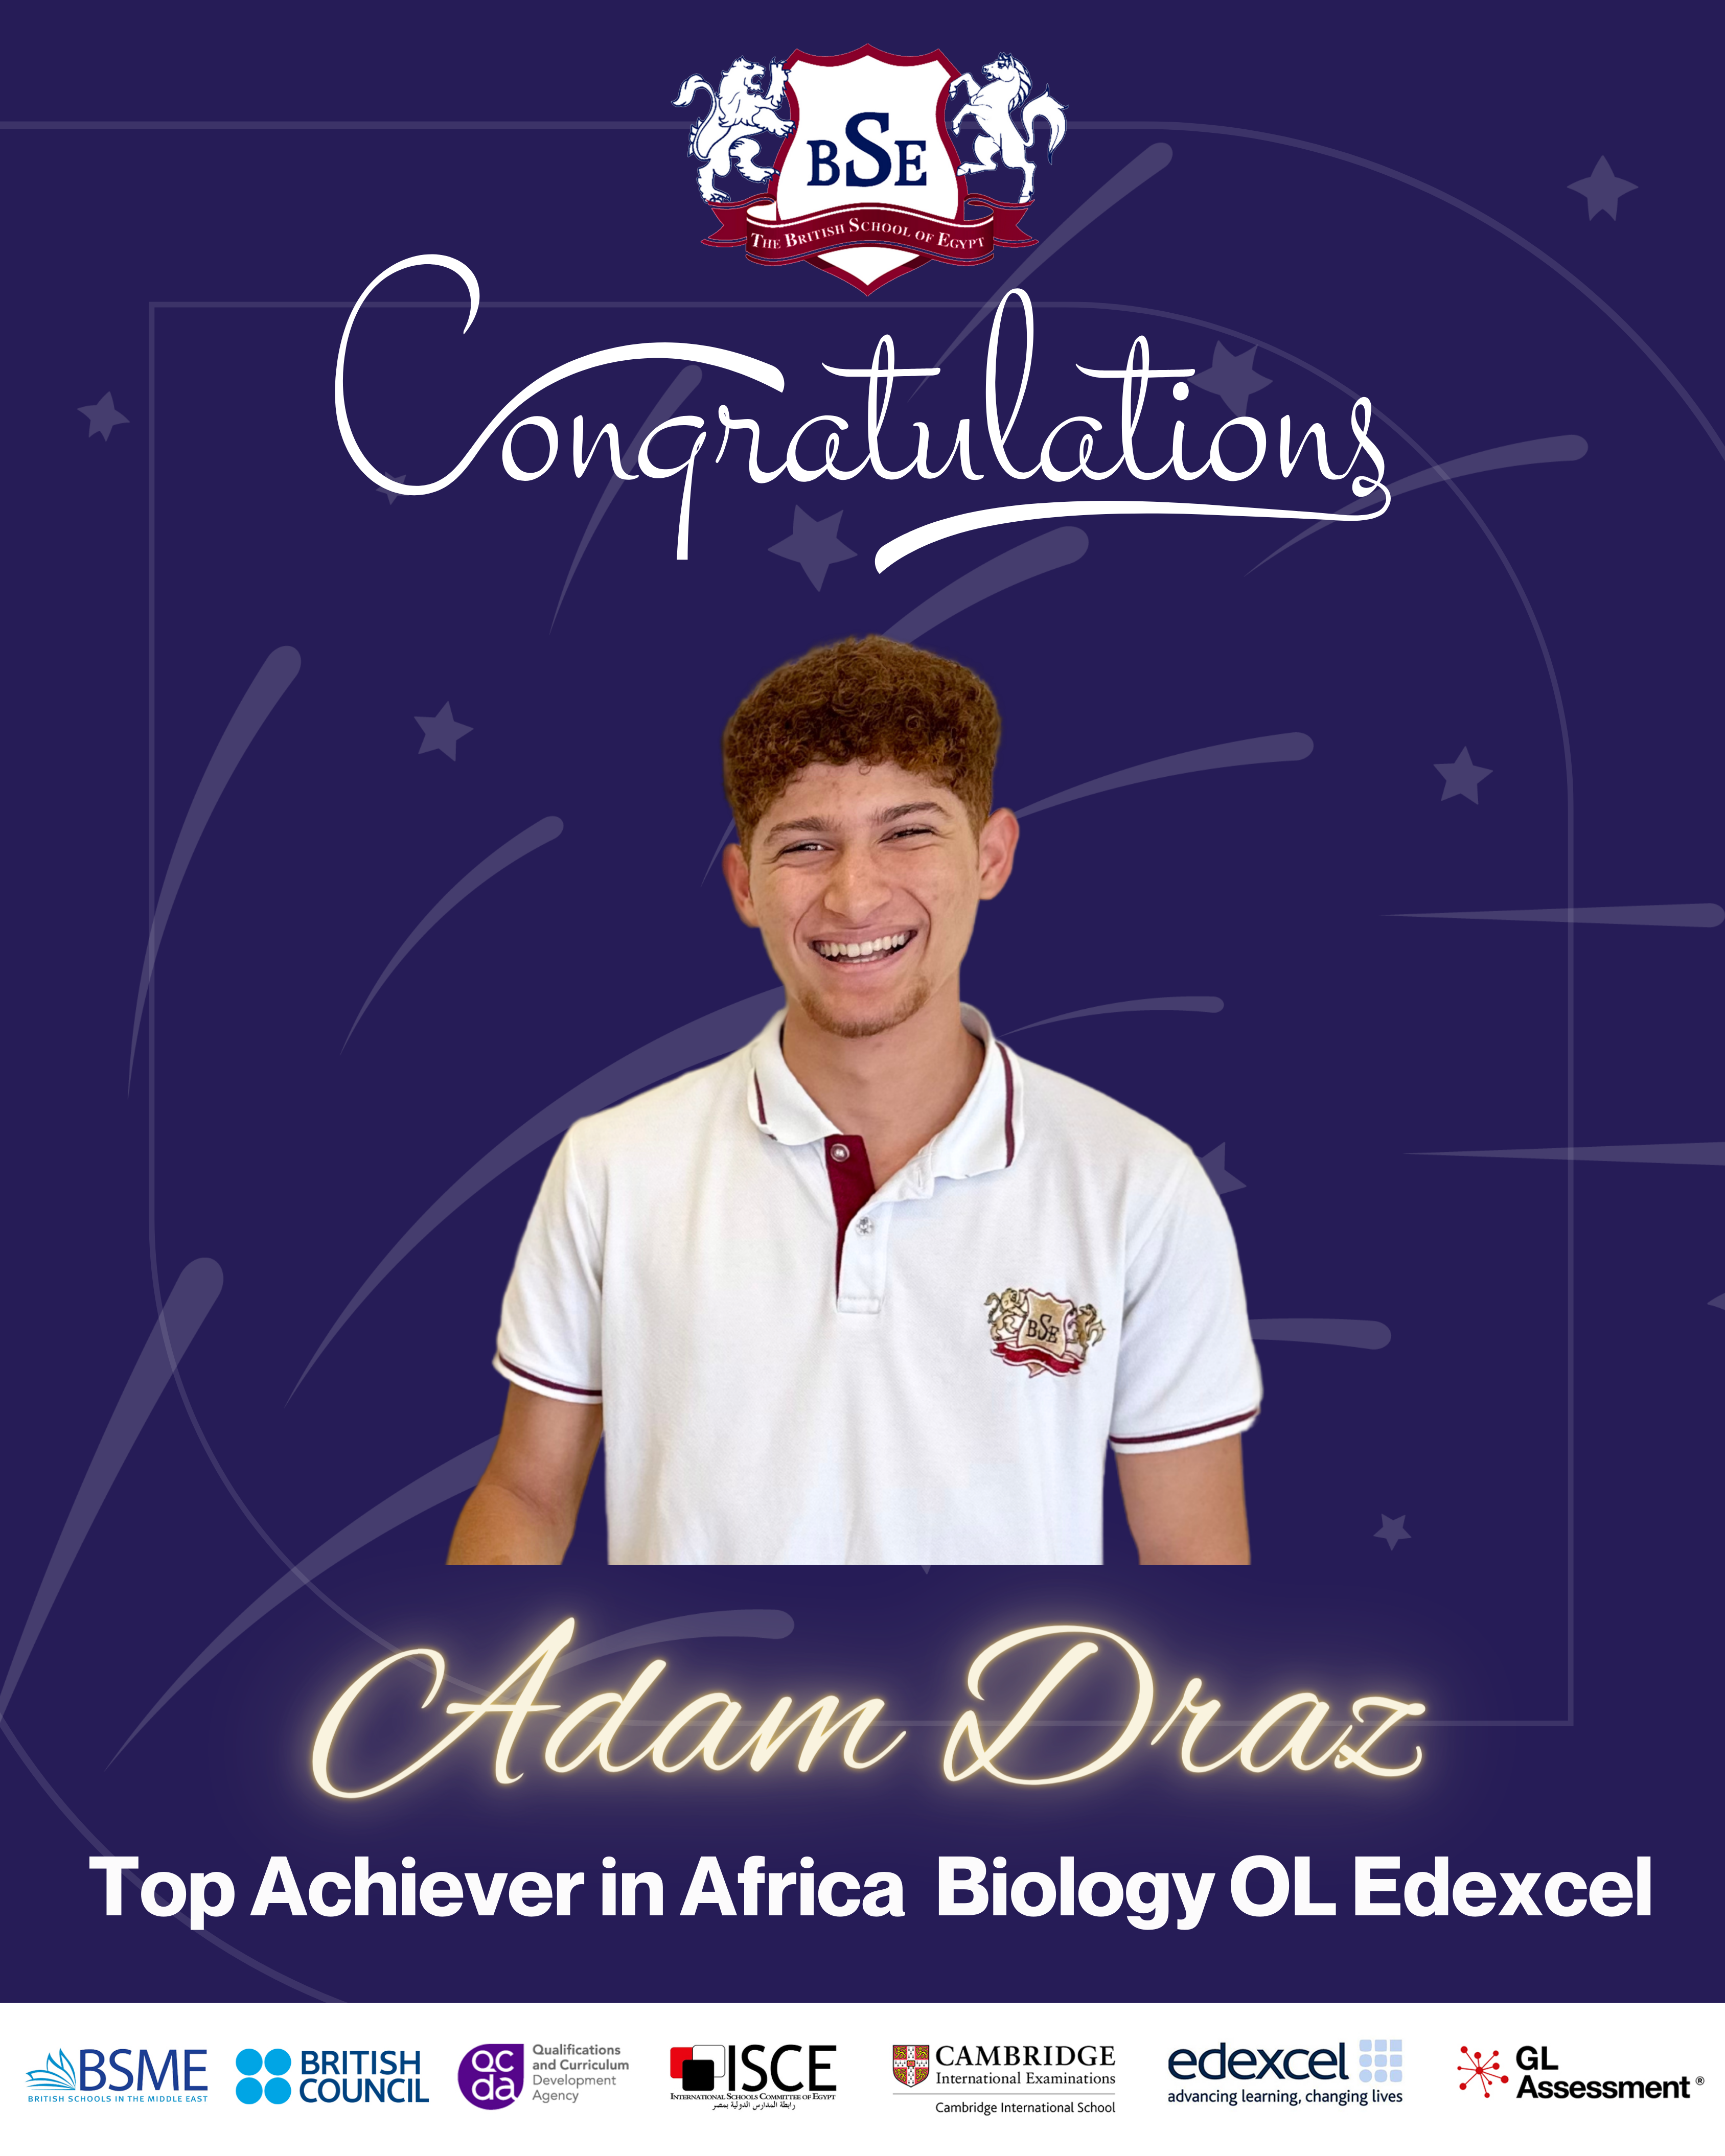 Top Achiever in Africa in Biology OL Edexcel at BSE! 🏆🔬